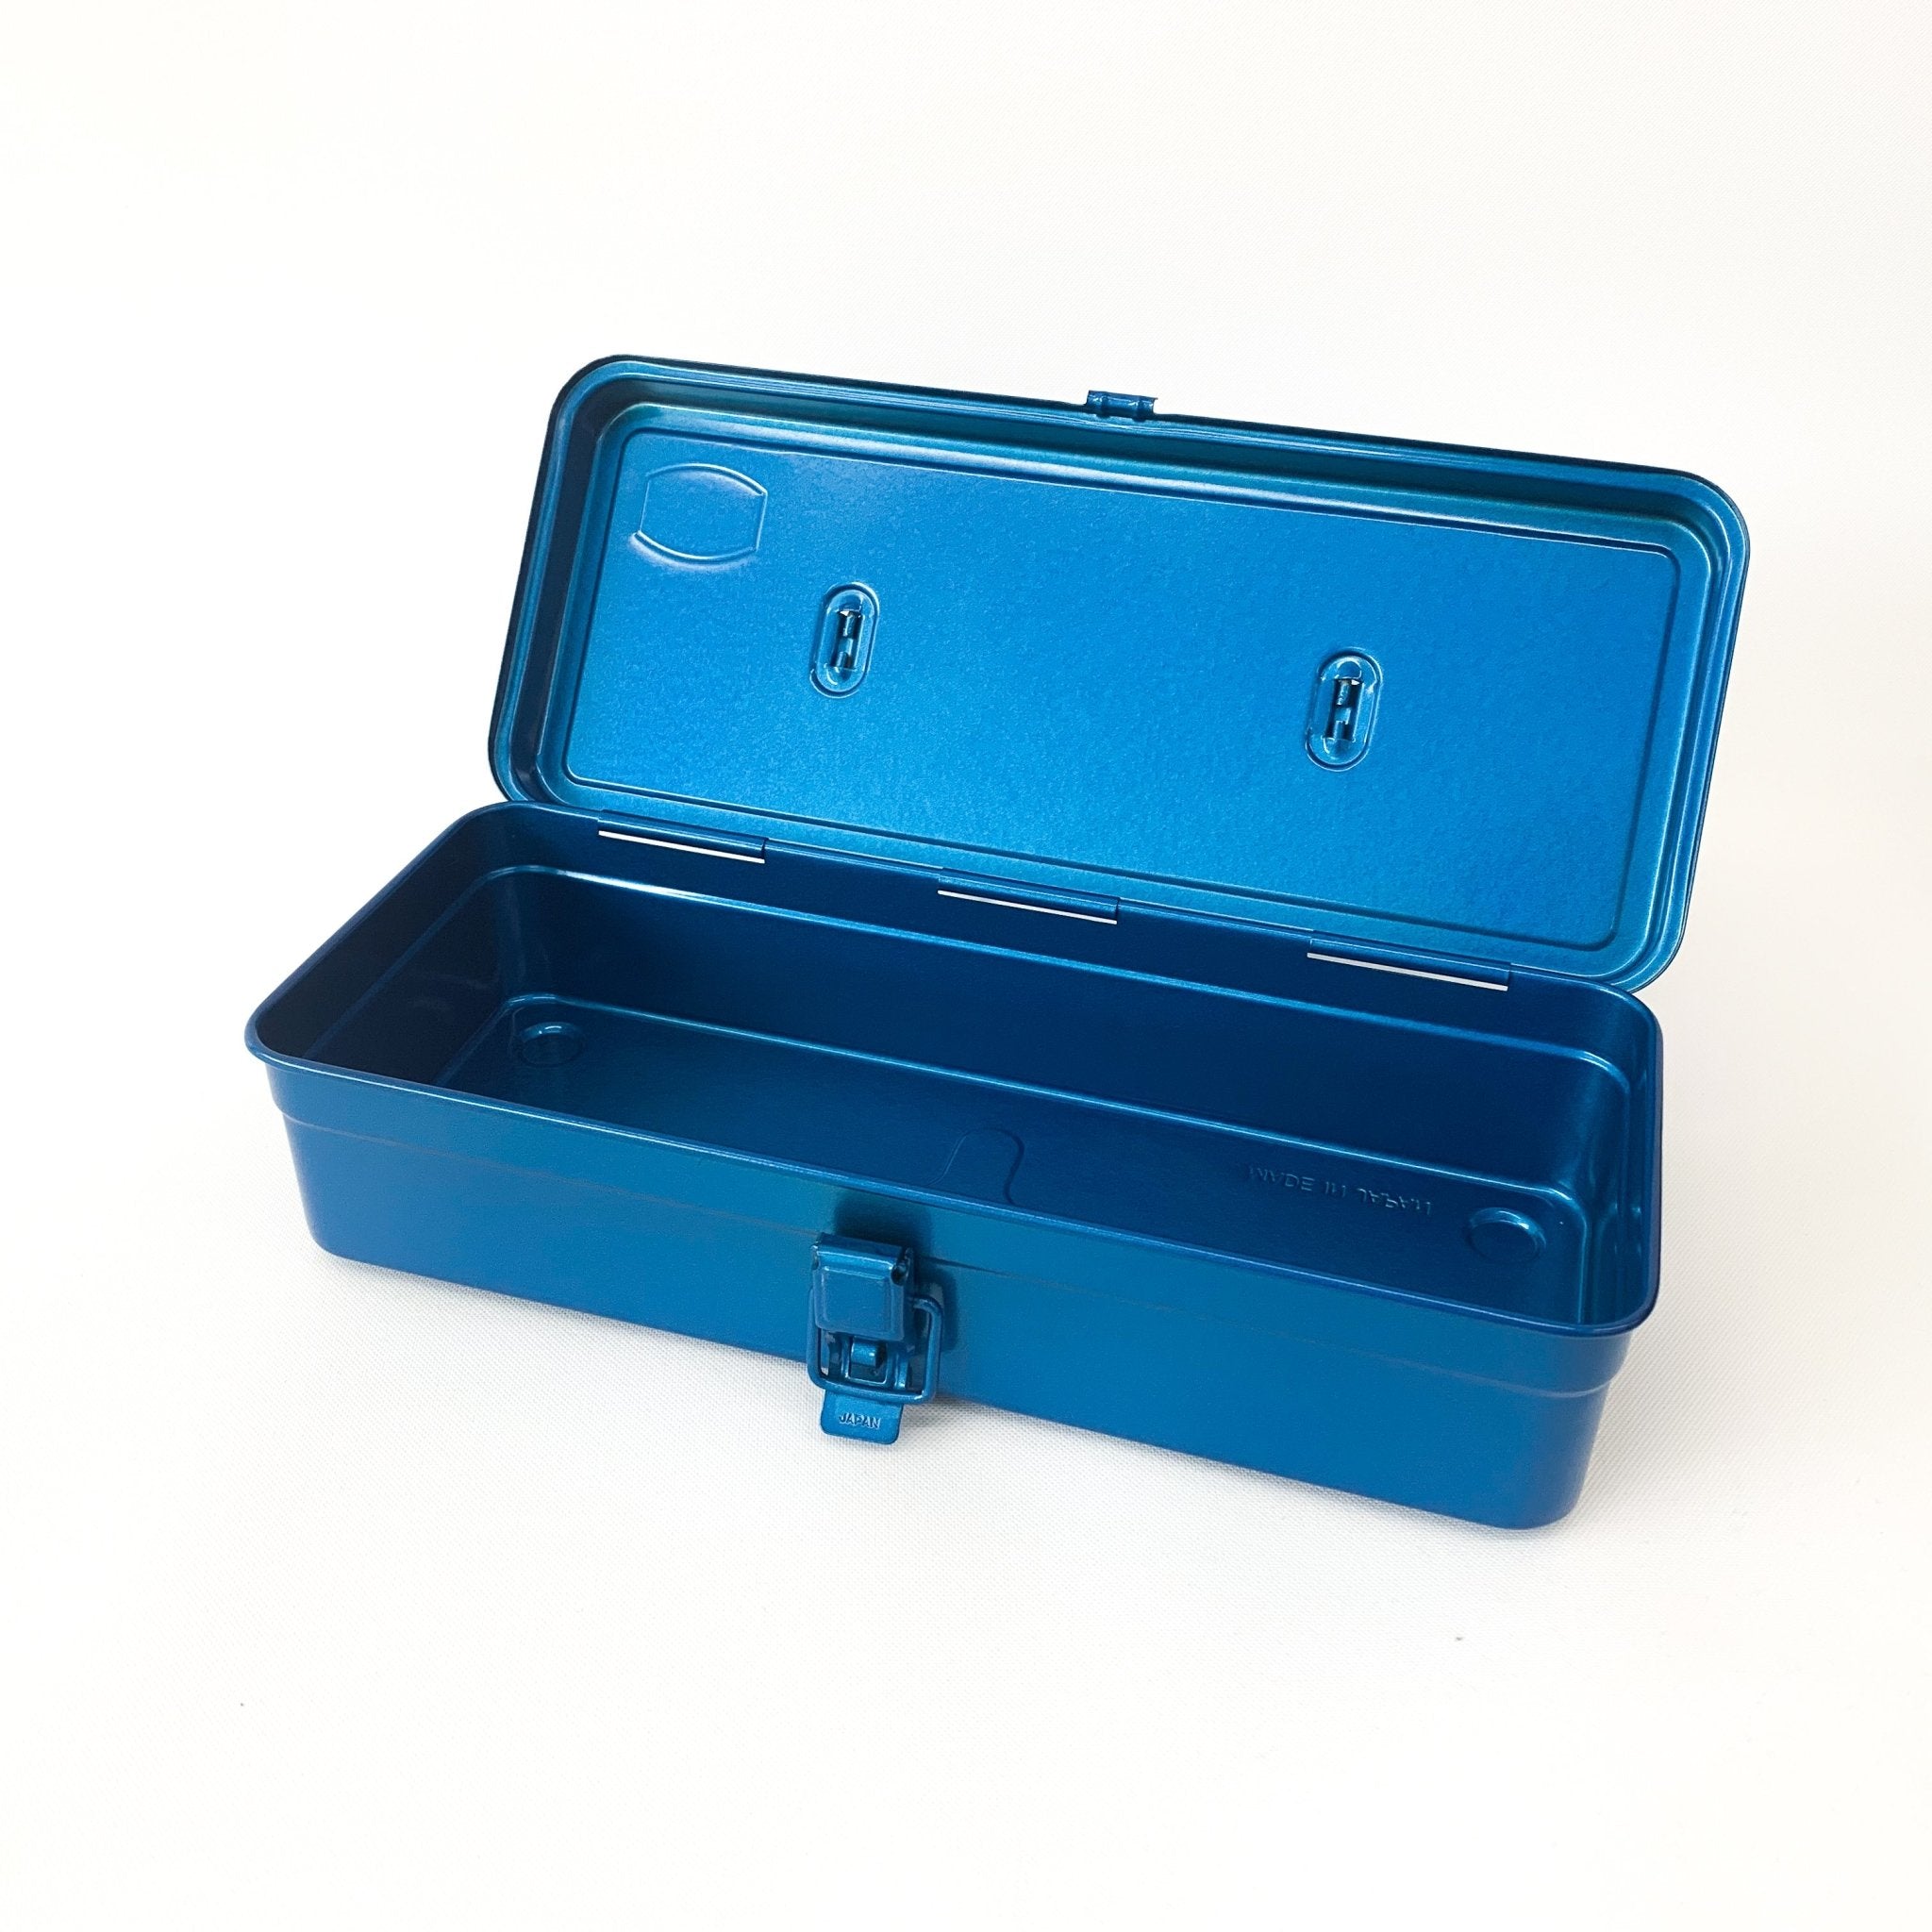 Toyo Tool Boxes - Flat Top